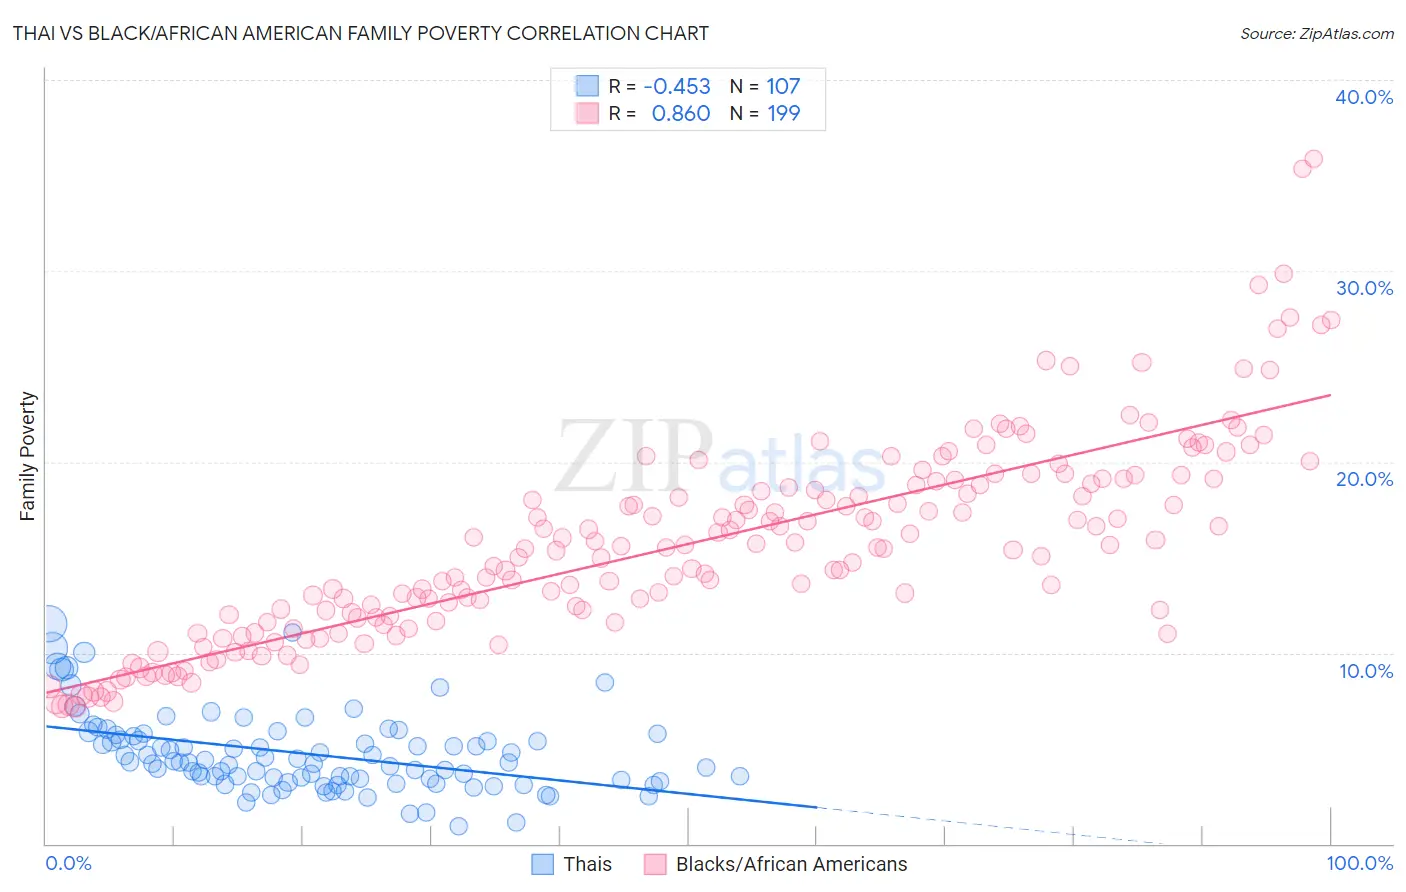 Thai vs Black/African American Family Poverty